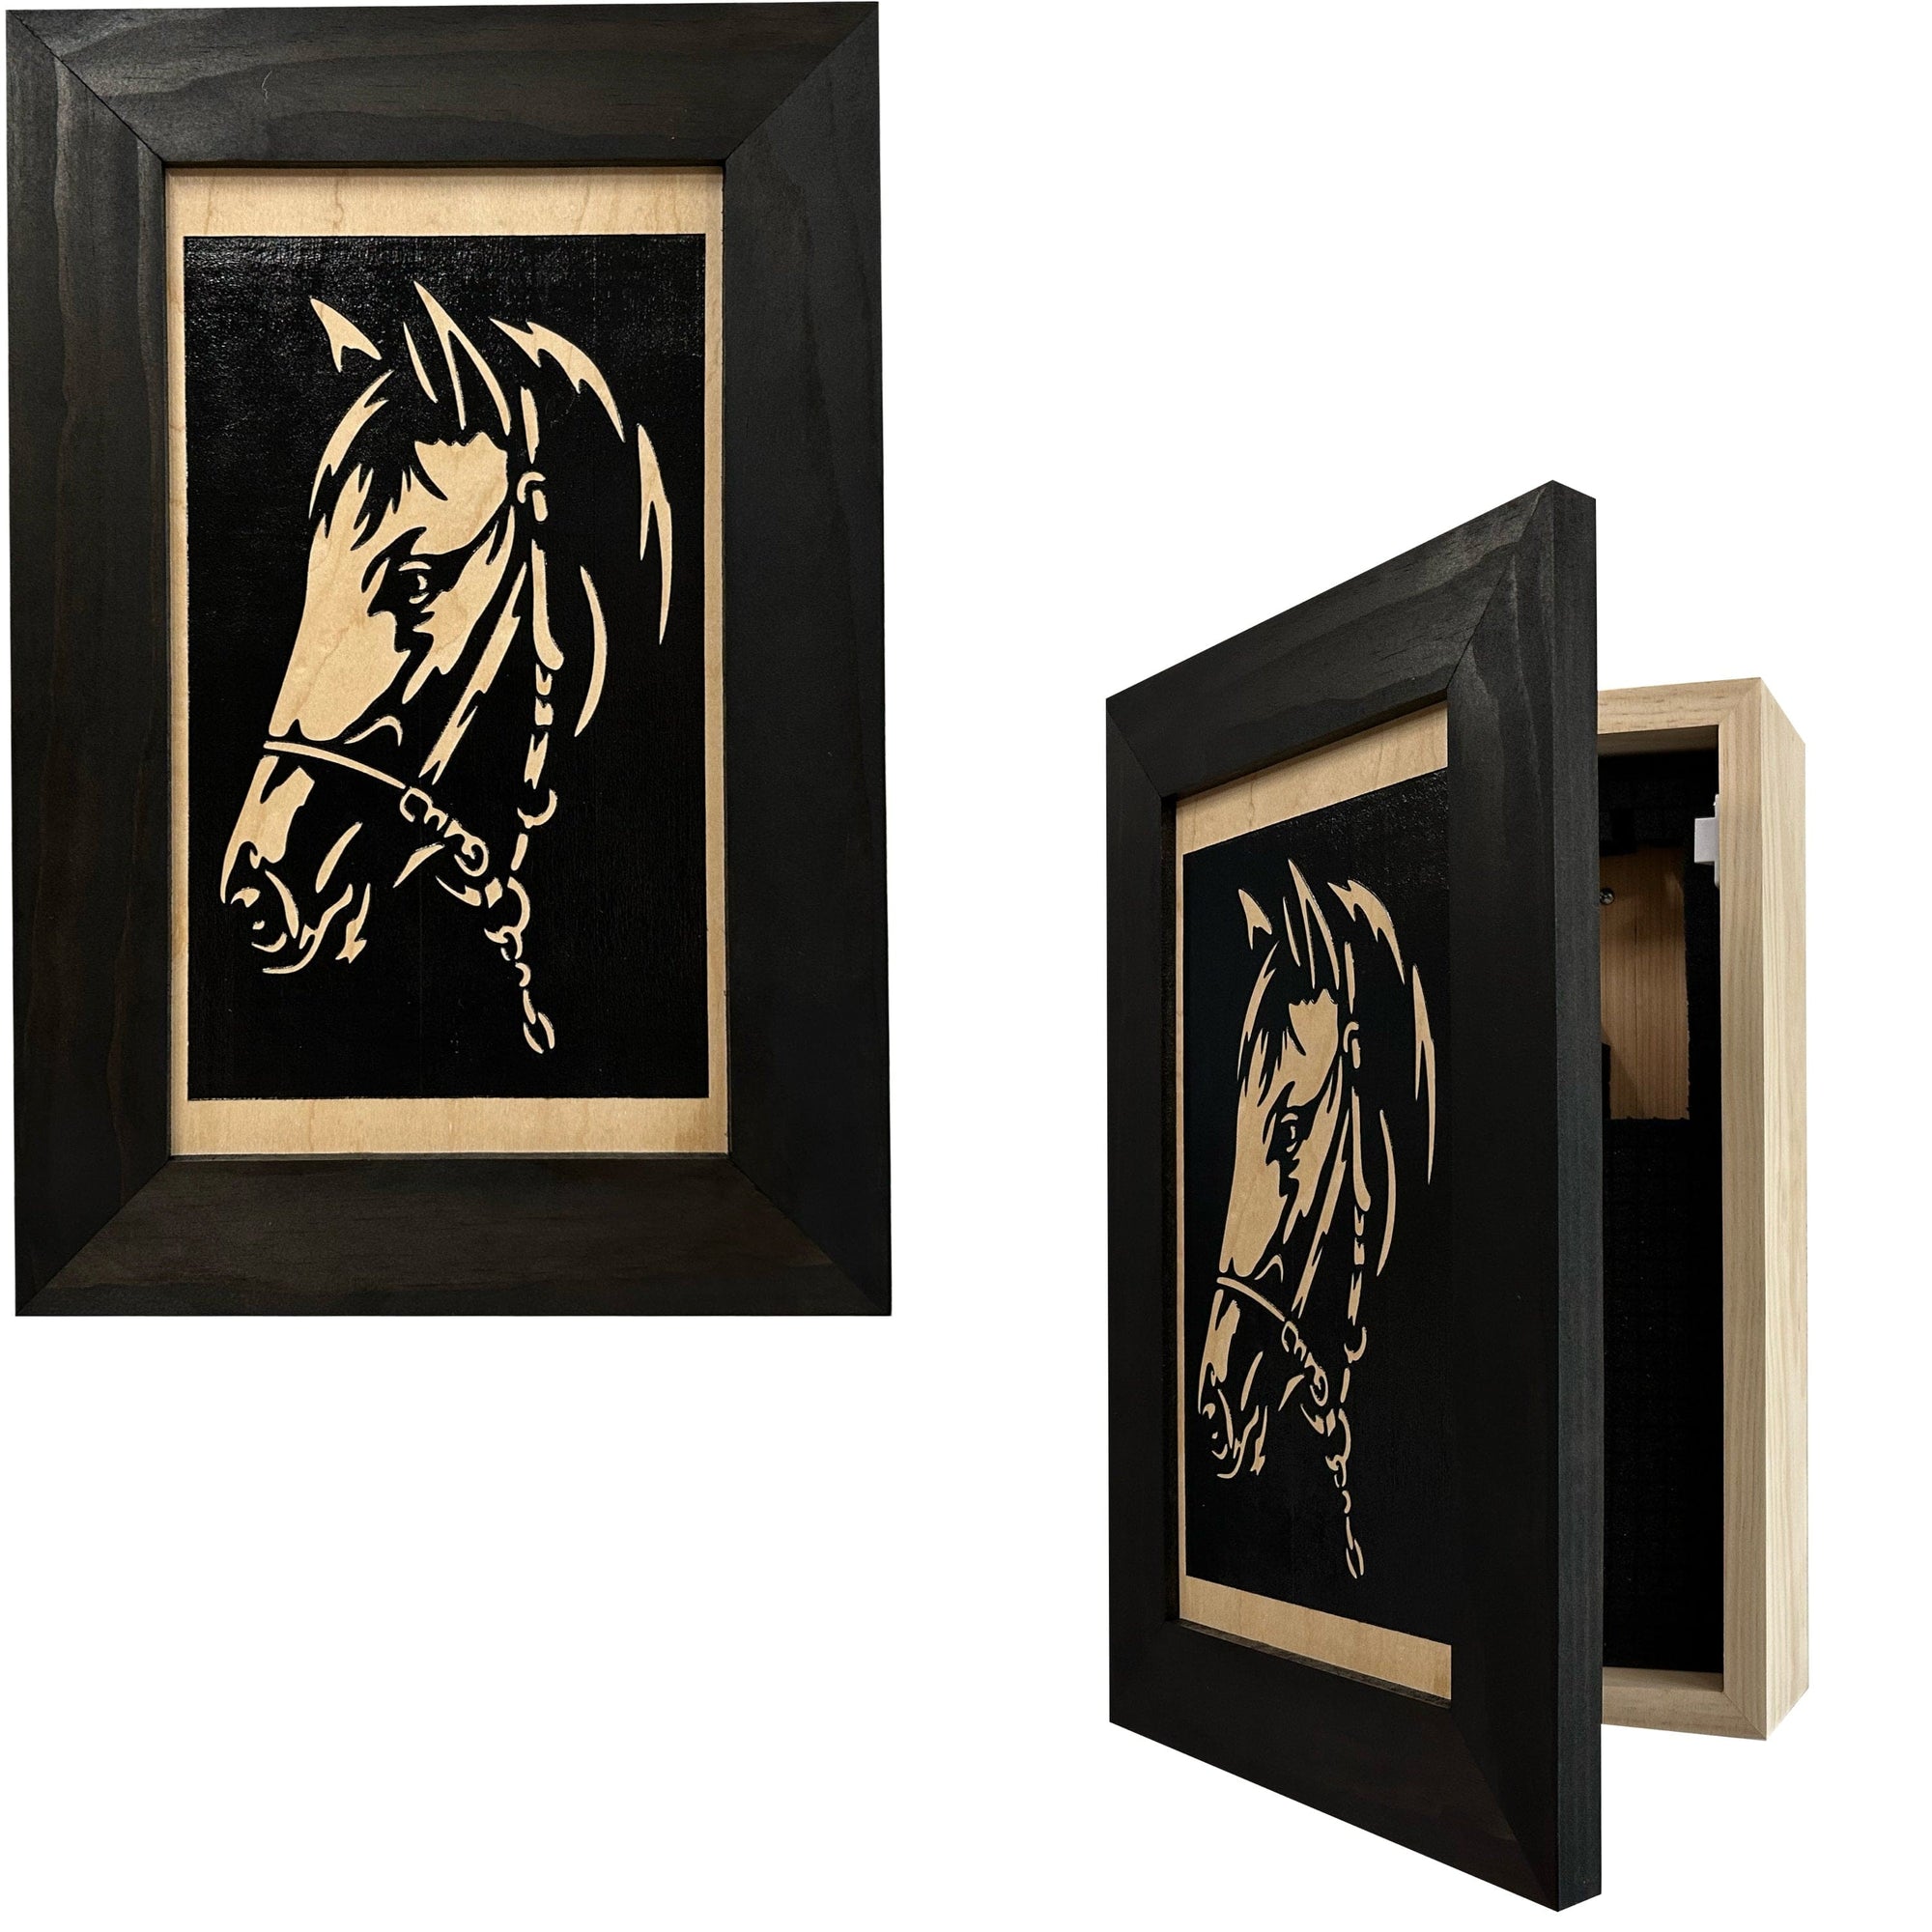 Hidden Gun Safe Black Horse Wall Art Decoration - Secure Gun Cabinet by Bellewood Designs Armadillo Safe and Vault